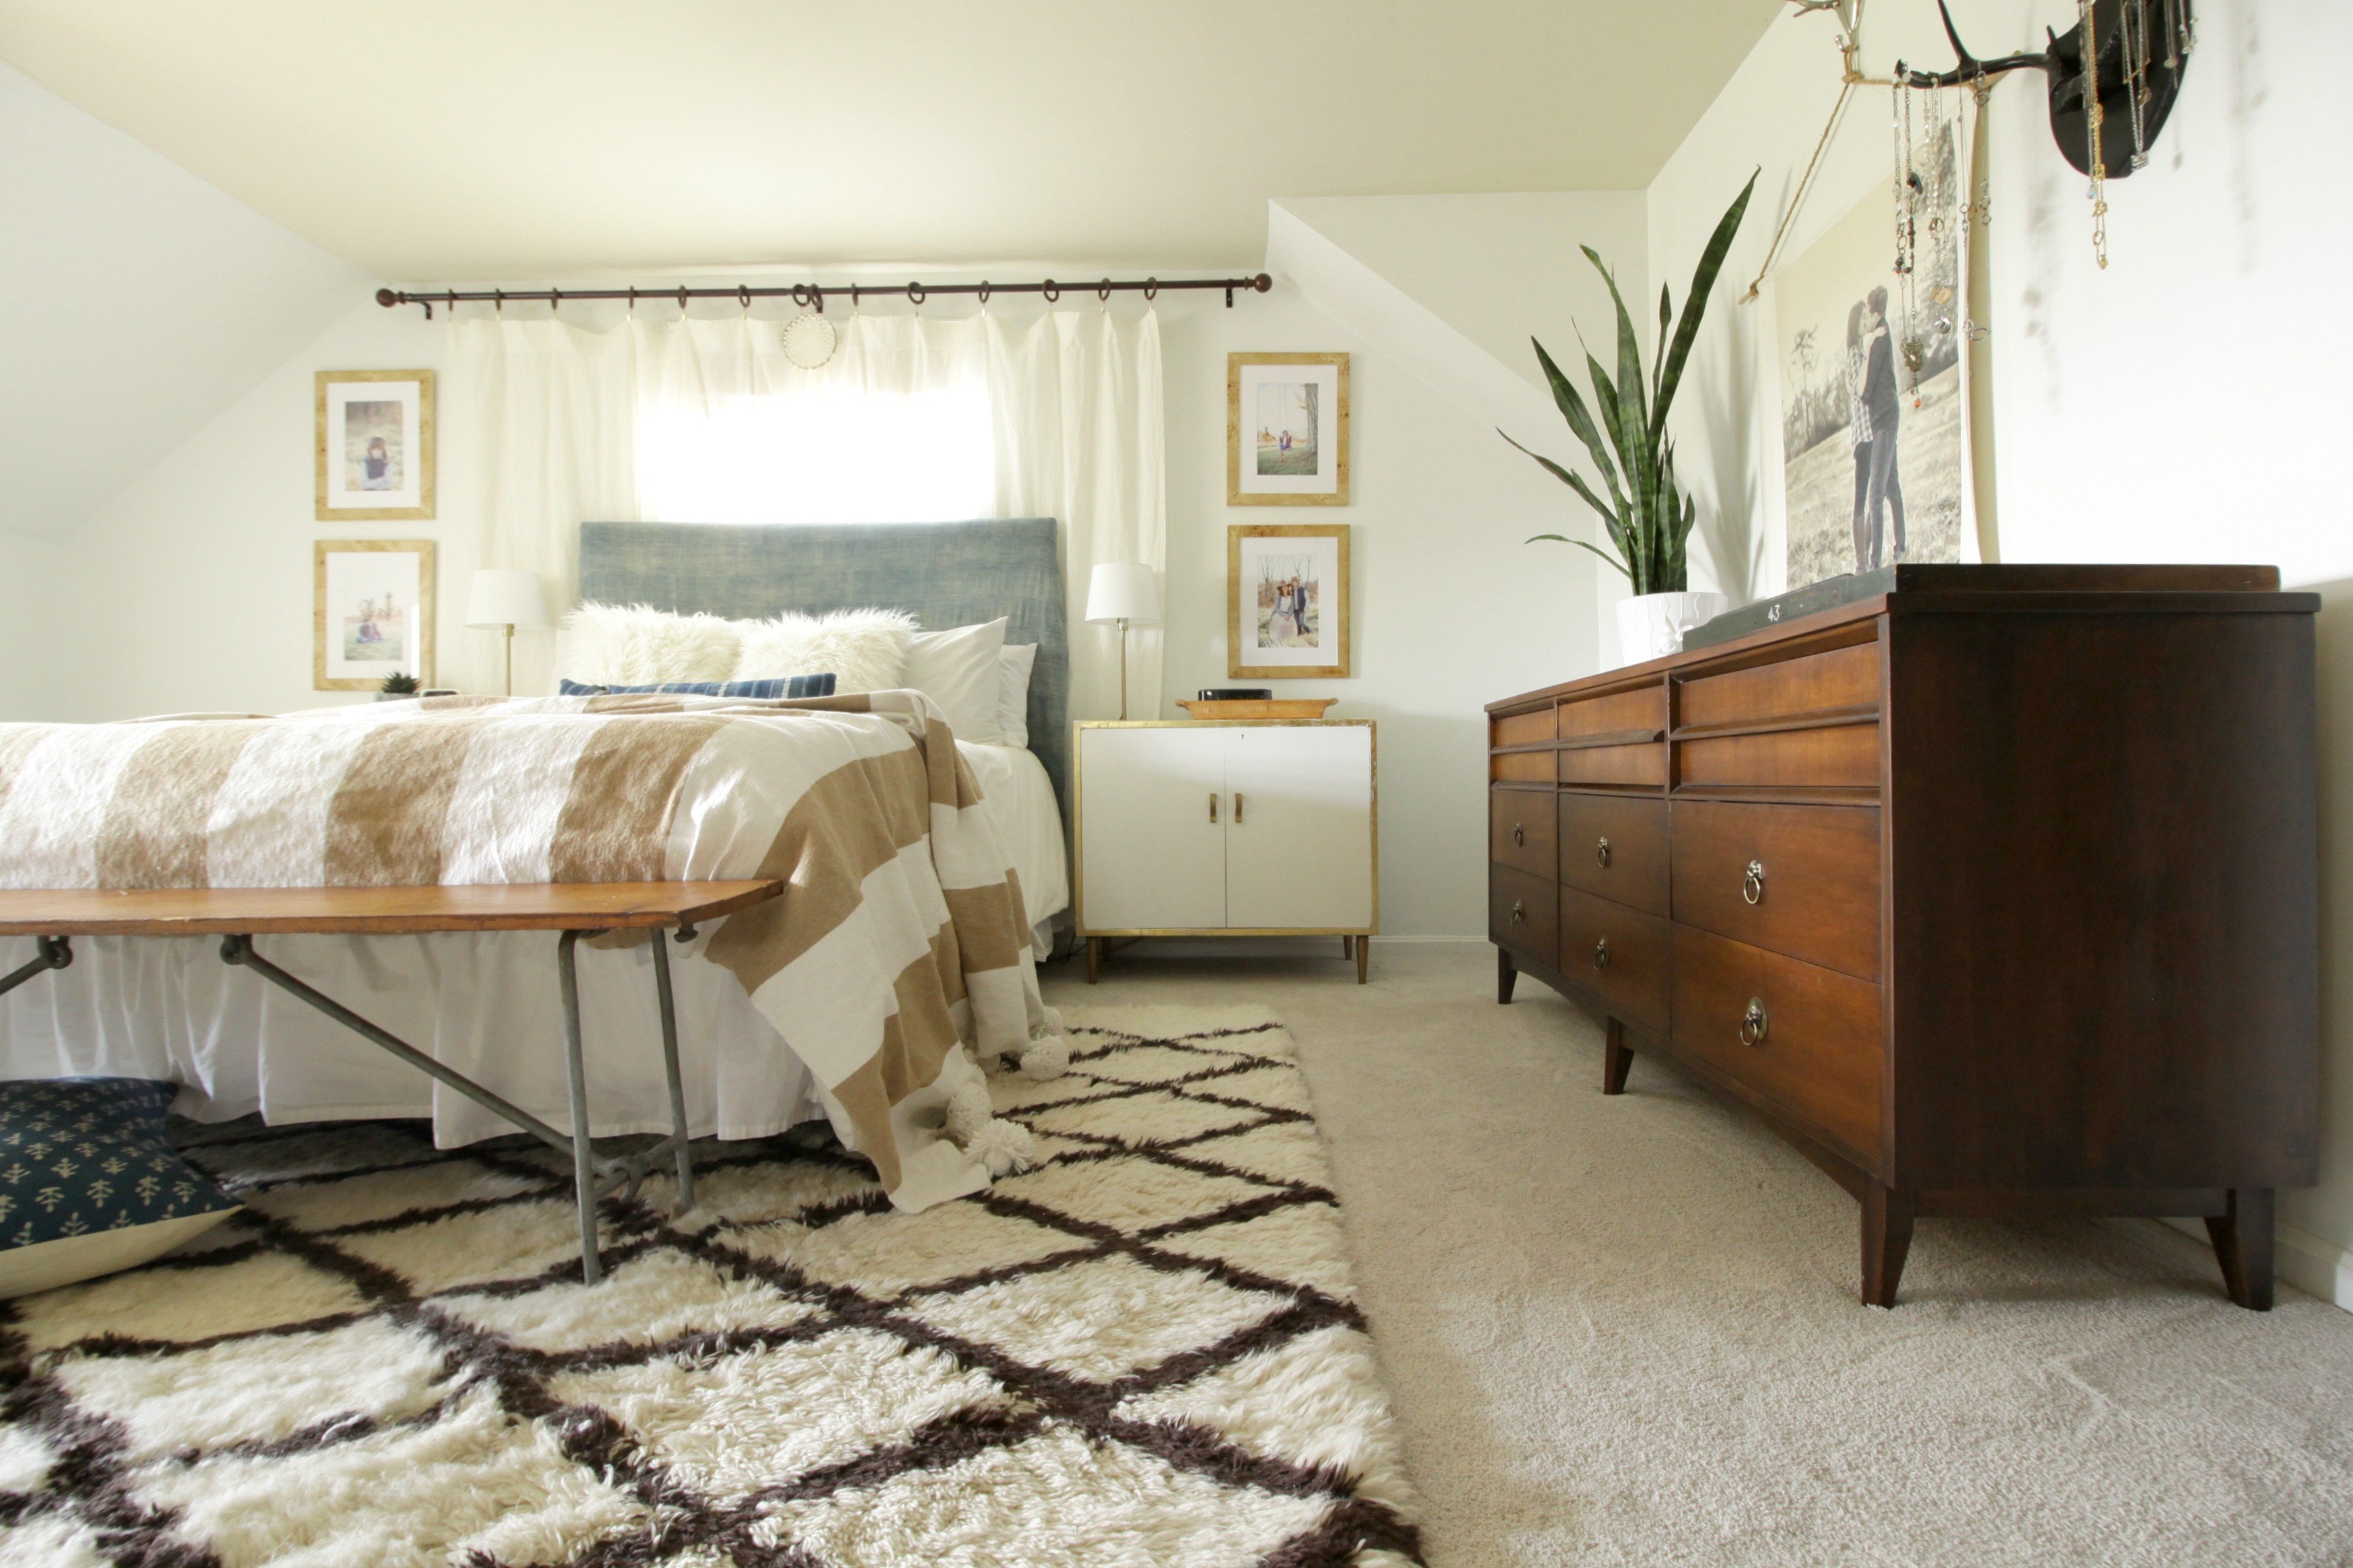 Bedroom rug rugged carpeting ideas for bedroom floors ... YBDNXSZ